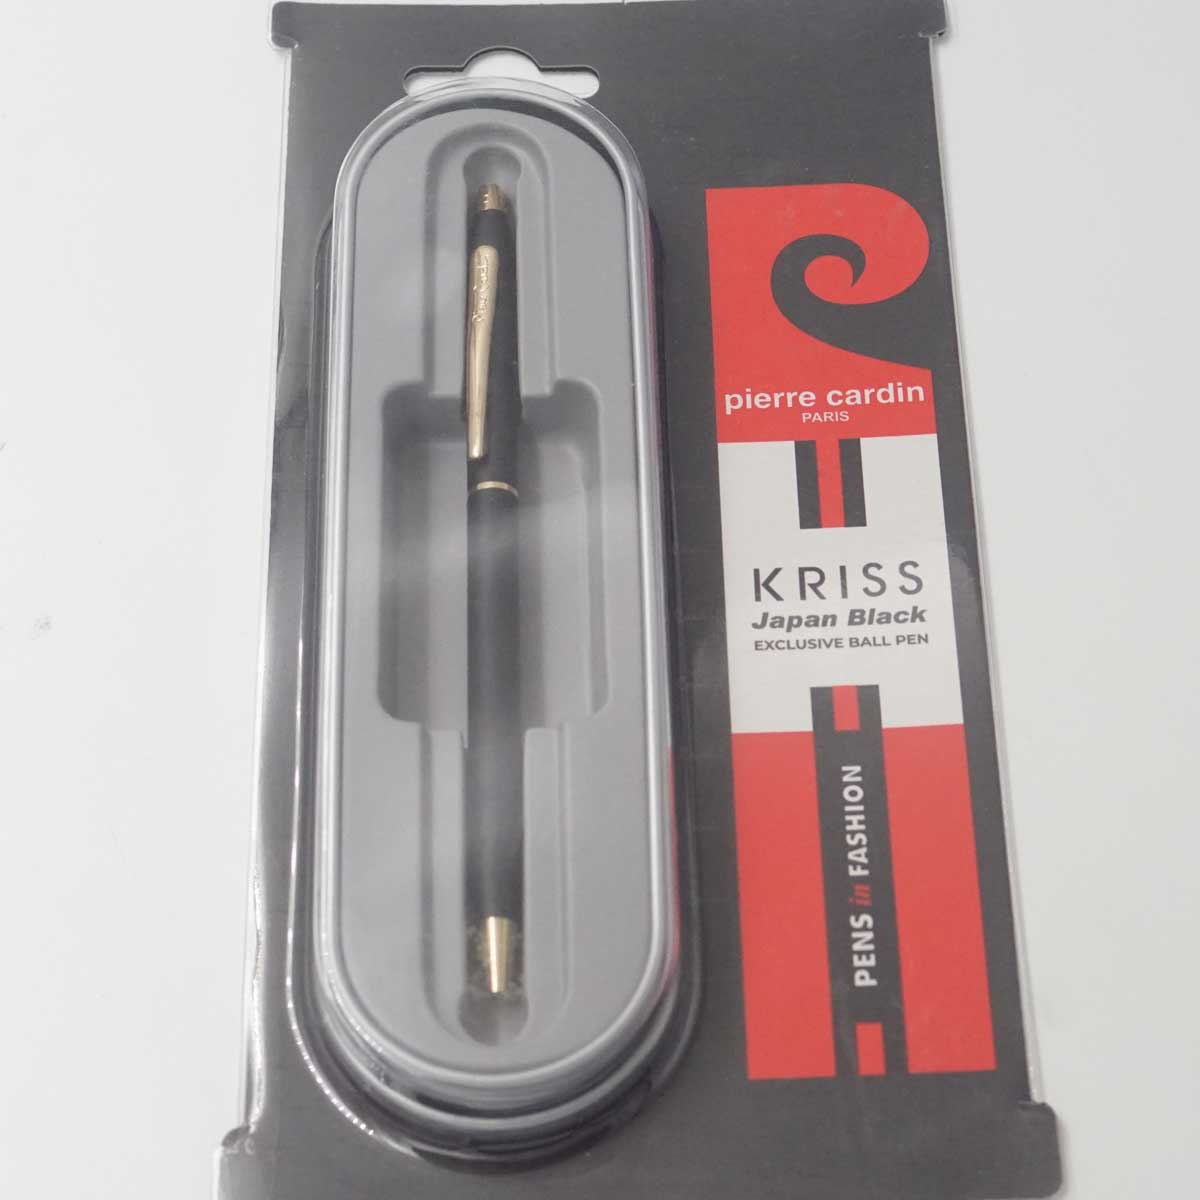 Pierre Cardin Kriss Japan Black Body With Gold Clip And Trim Medium Tip Twist Type Ball Pen SKU 25247